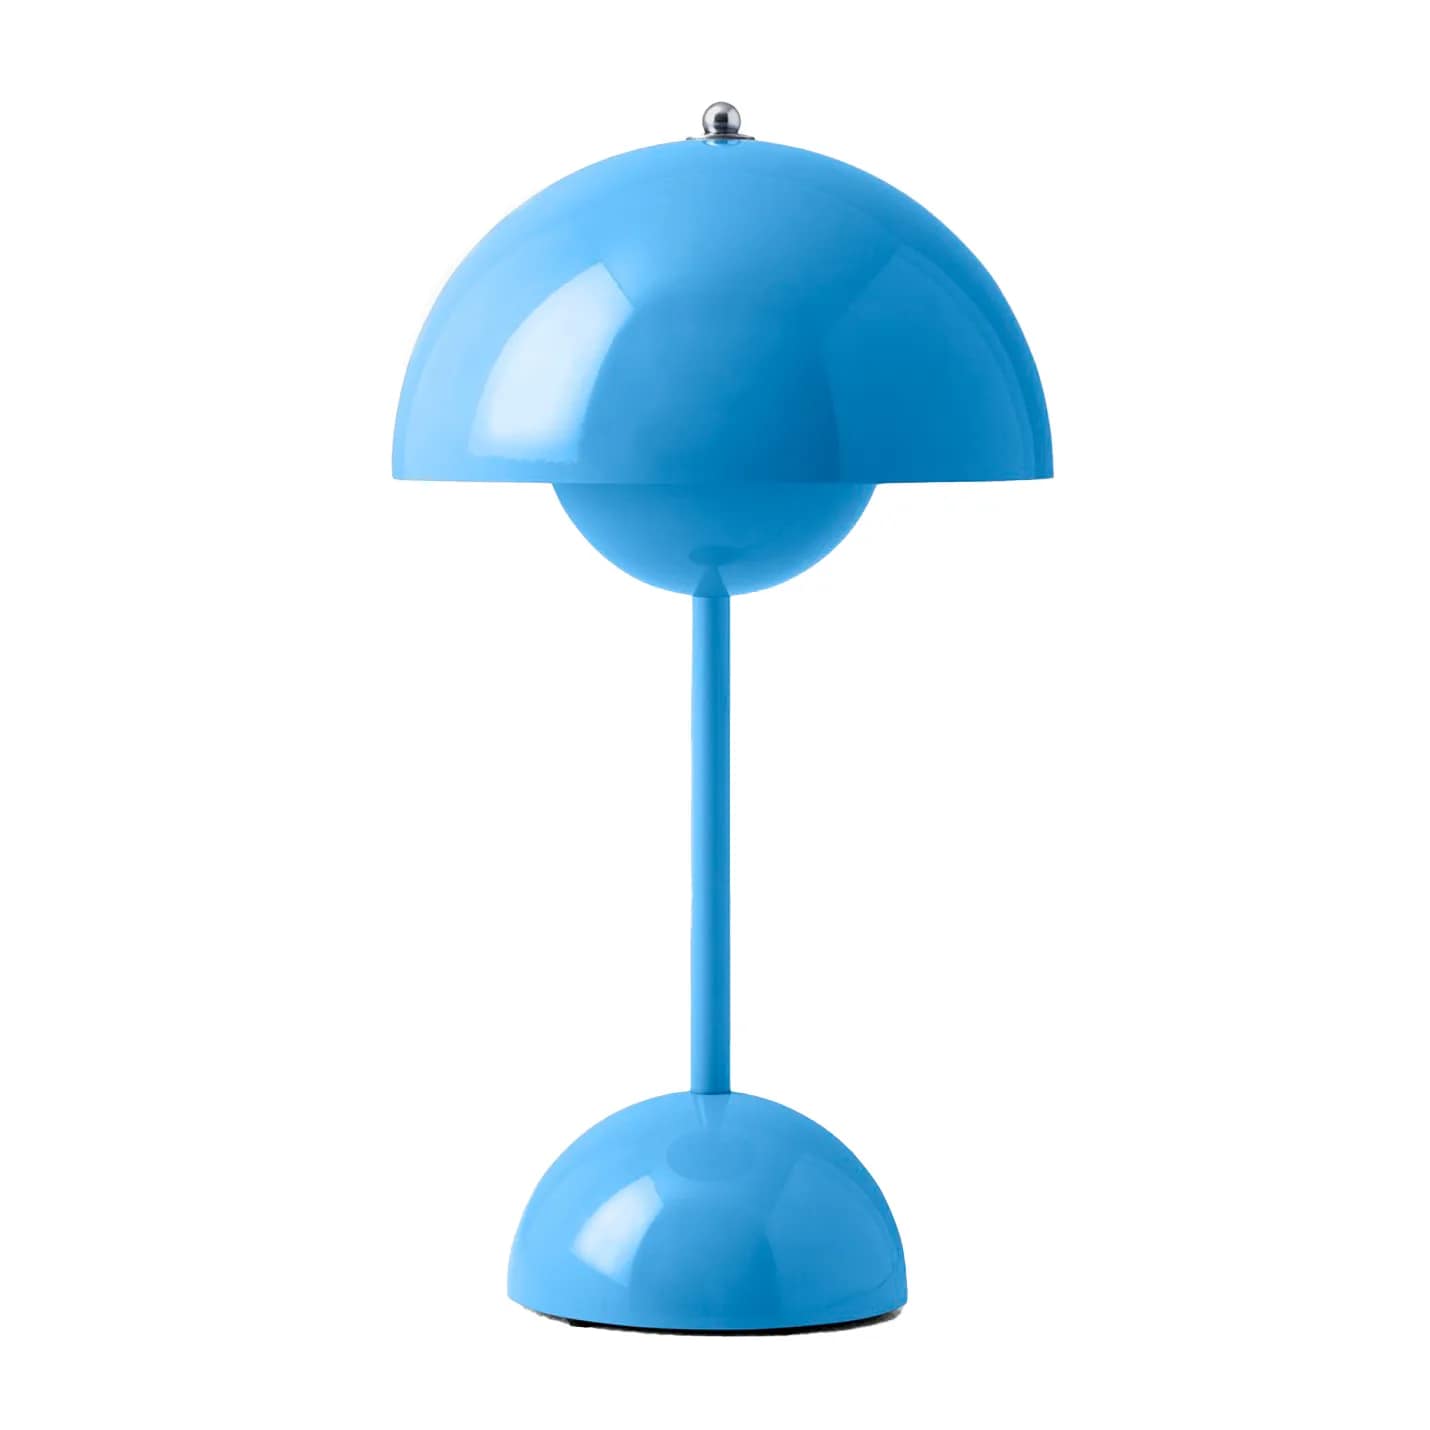 Flowerpot VP9 - Table Lamp, Portable